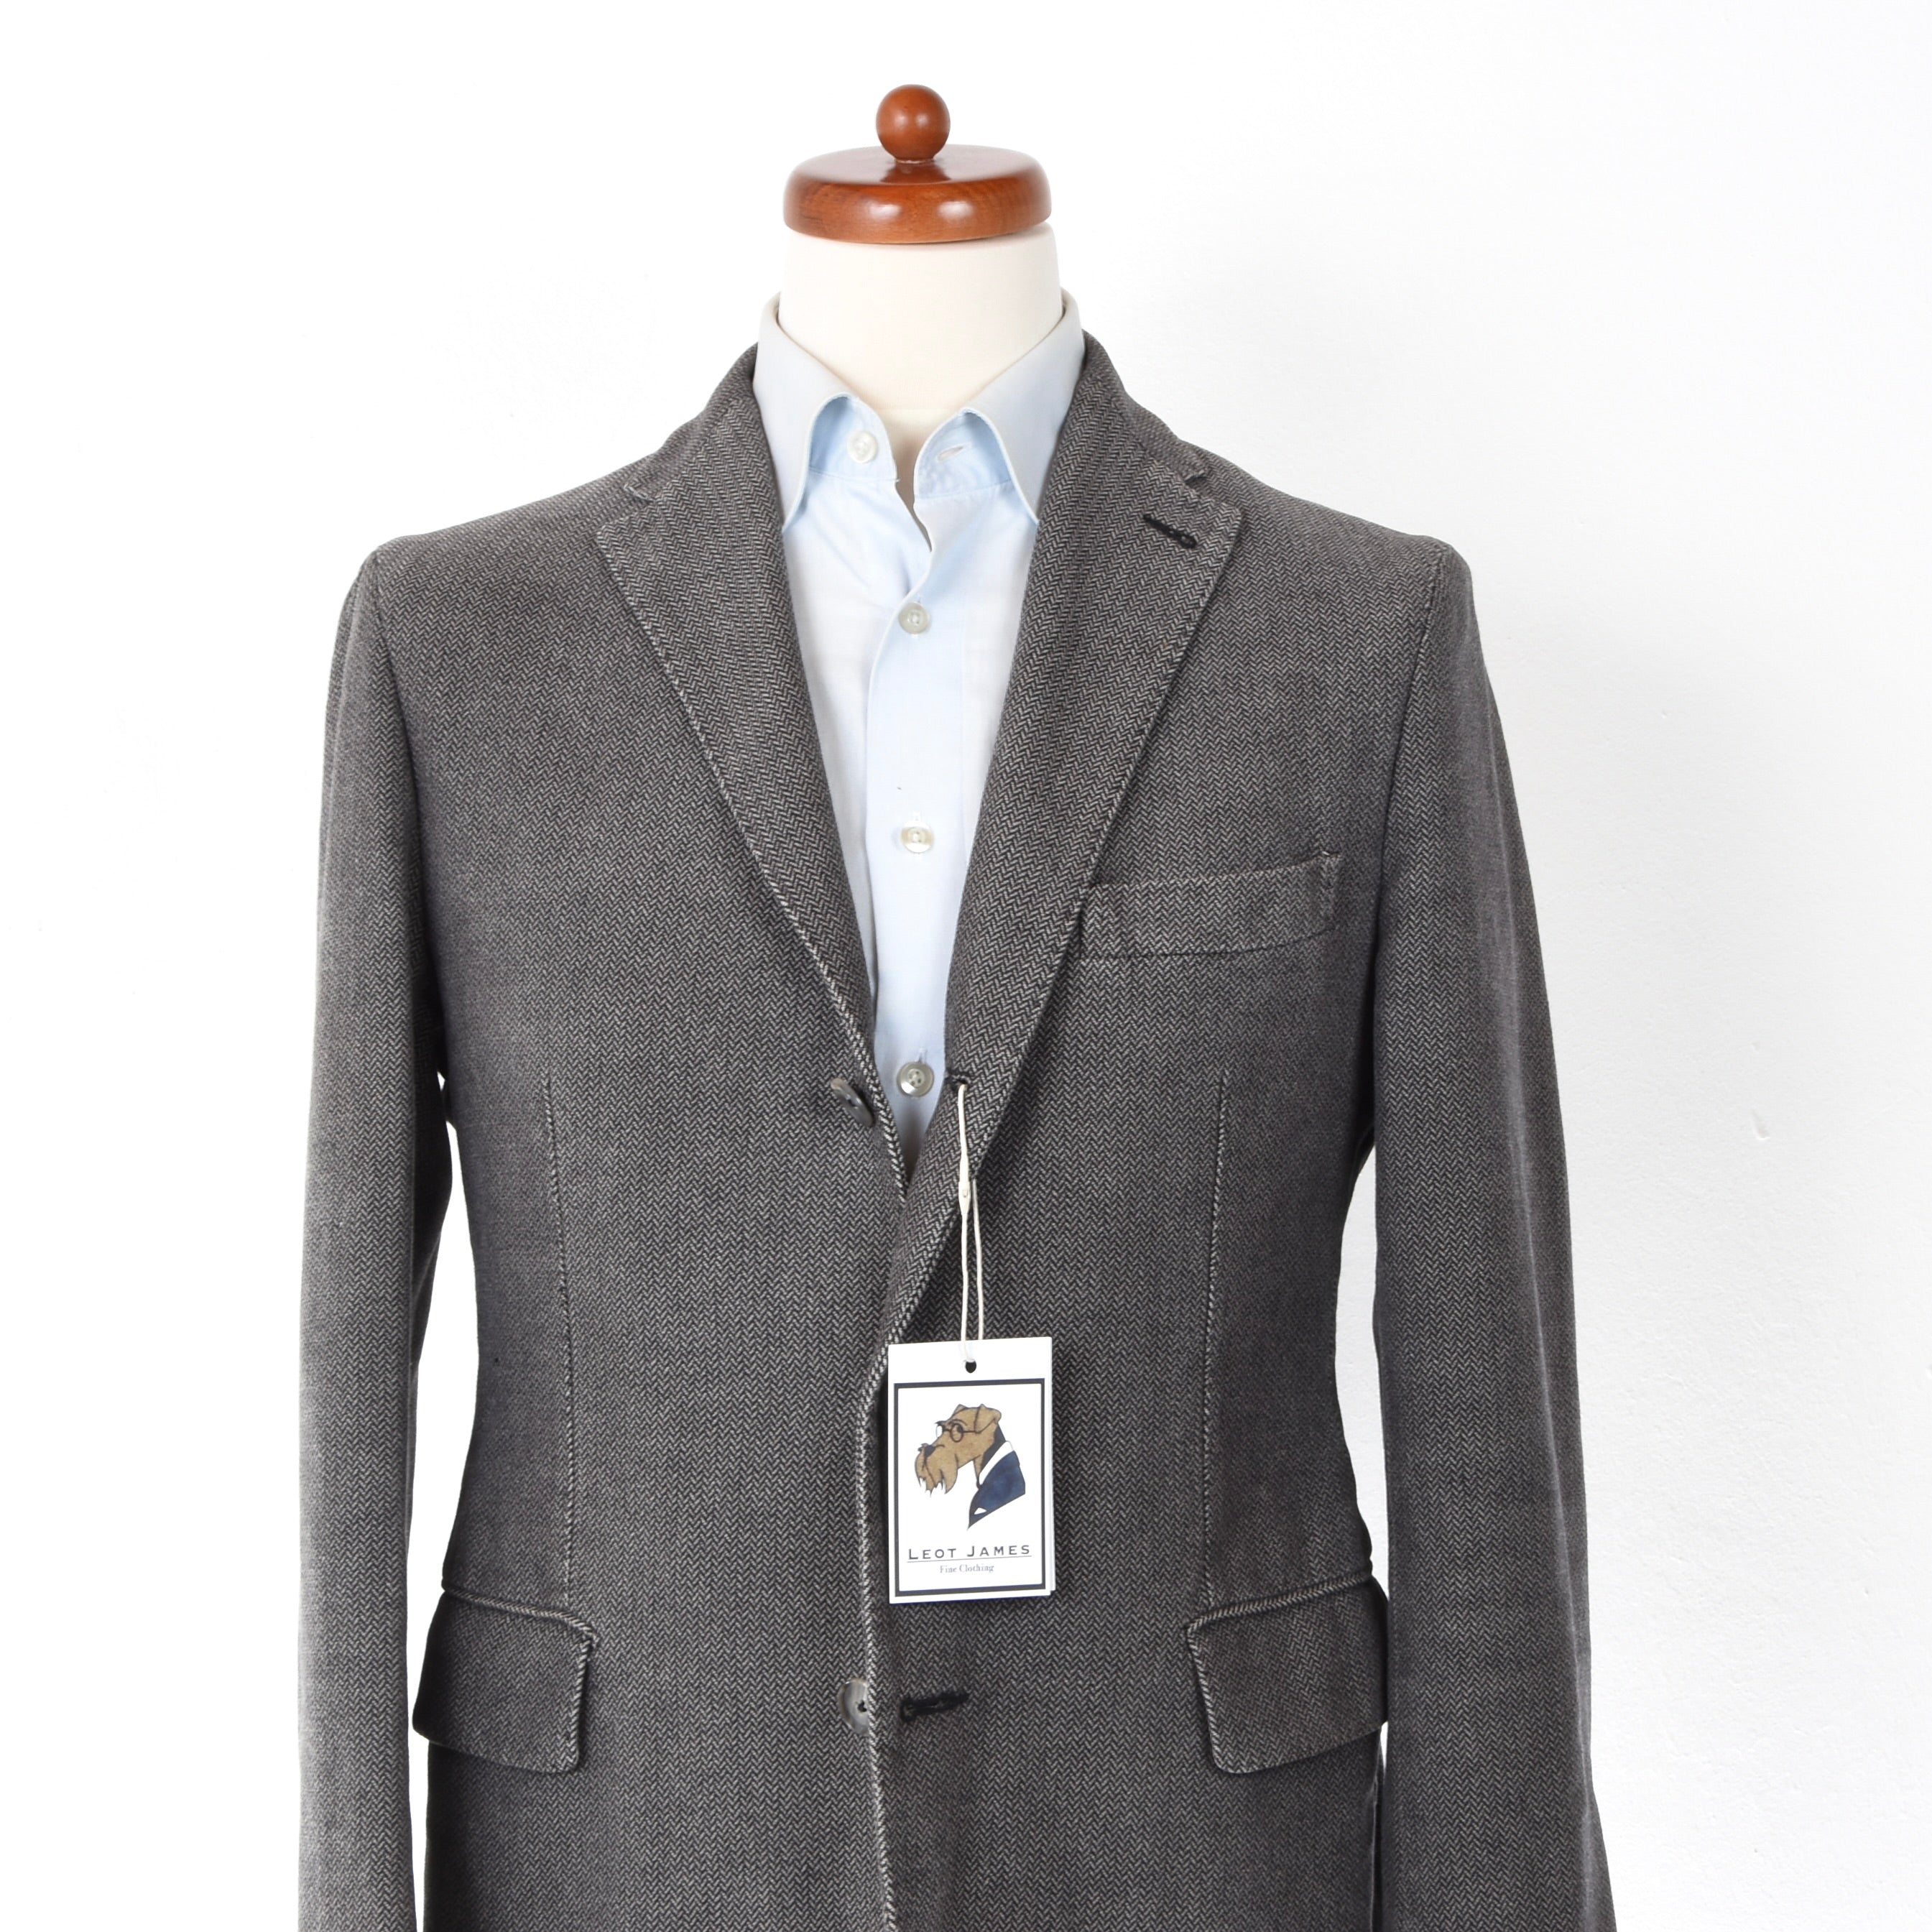 Tagliatore Cotton Jacket Size 48 - Grey – Leot James